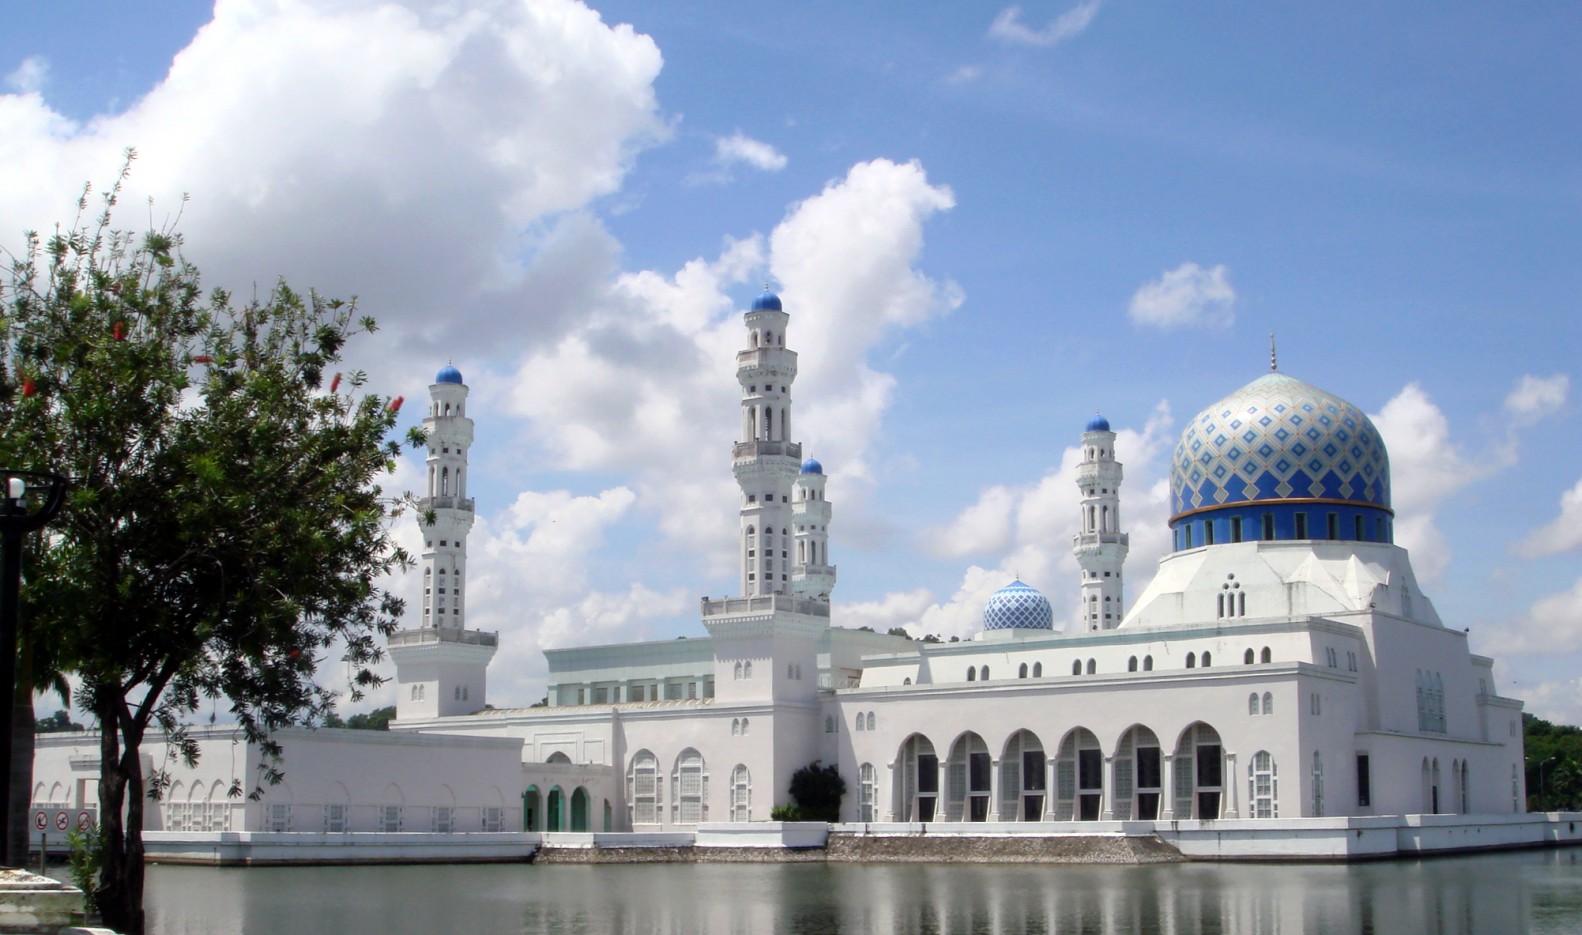 Kota_Kinabalu_mosque » Dee Luxe Journeys